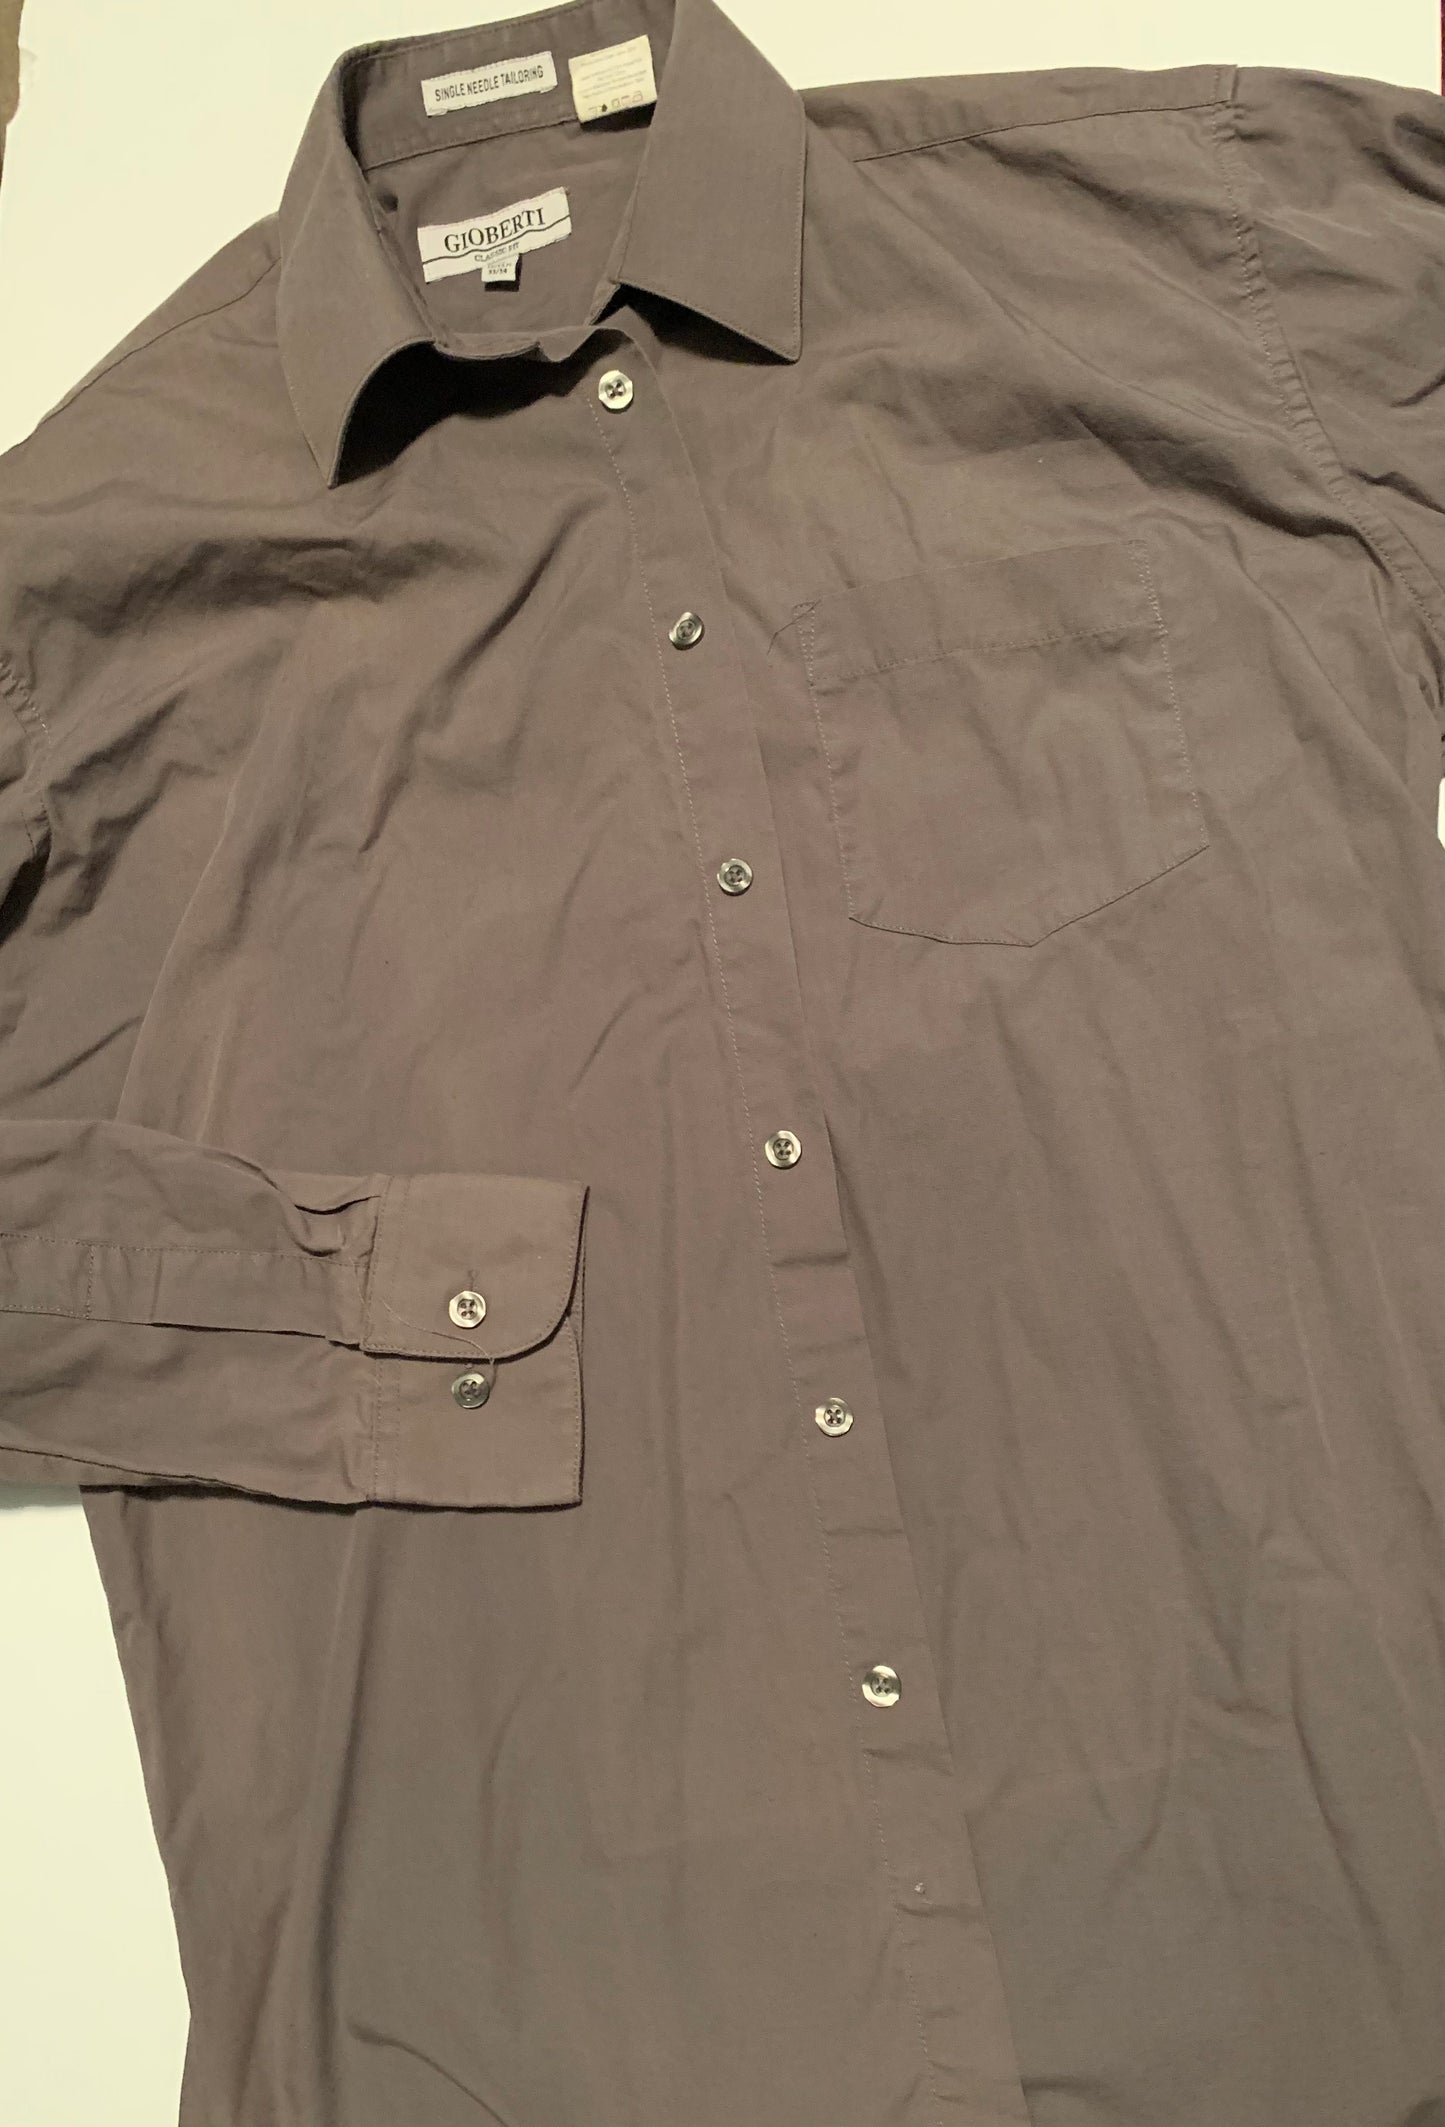 3 Men’s dress Shirts Size M 32-34 Button Up Long Sleeved Clothing bundle Lot